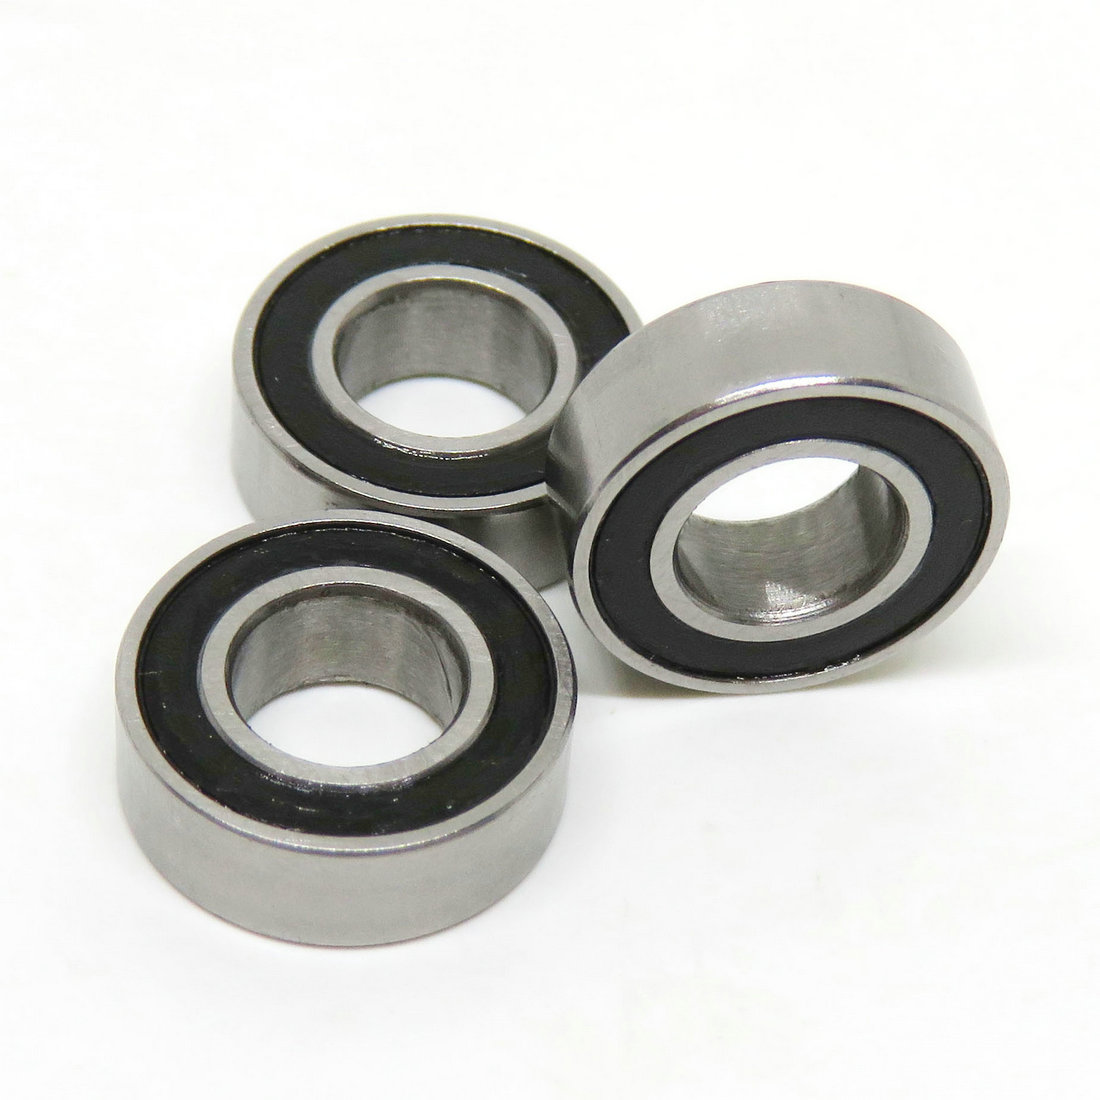 Zoty SMR-Stainless Steel Miniature Bearing